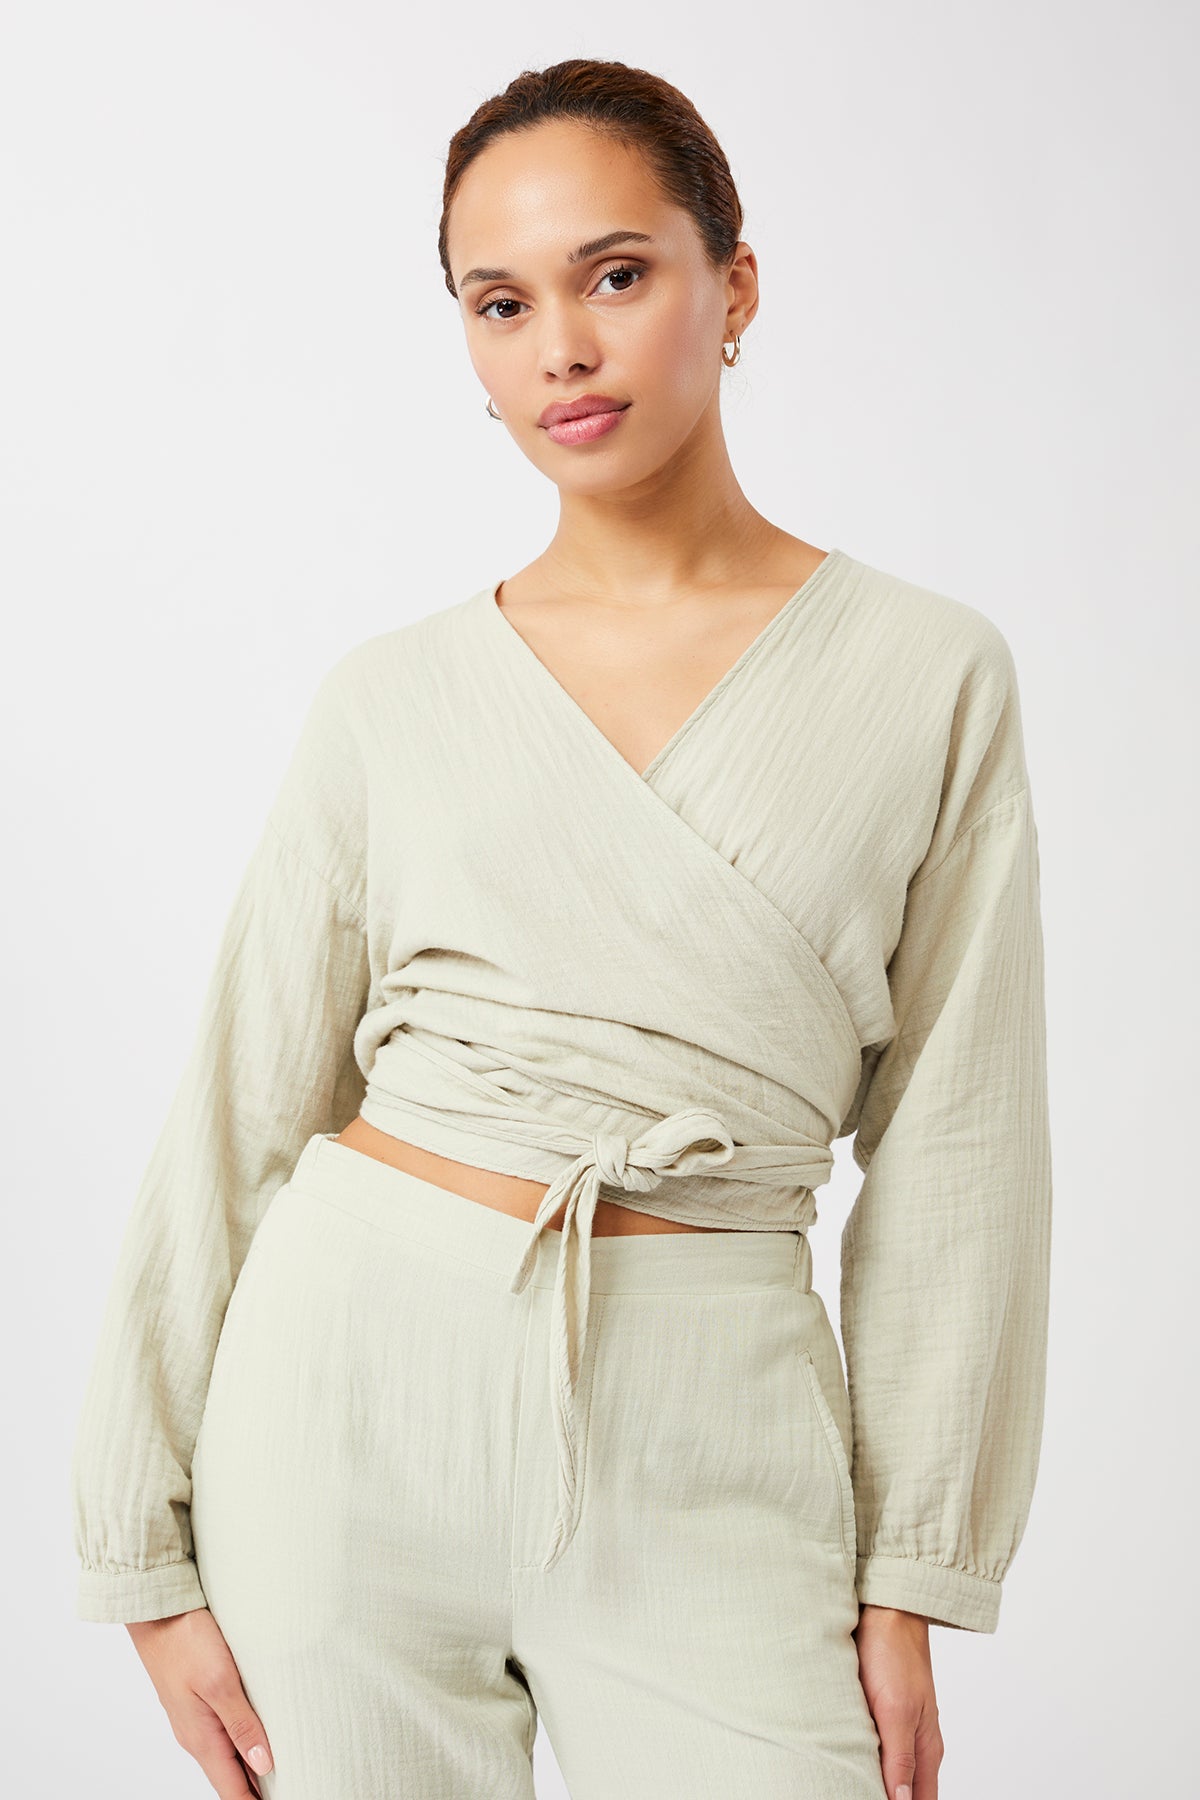 Mandala Yoga Jacke Grün Front - Wrap Top